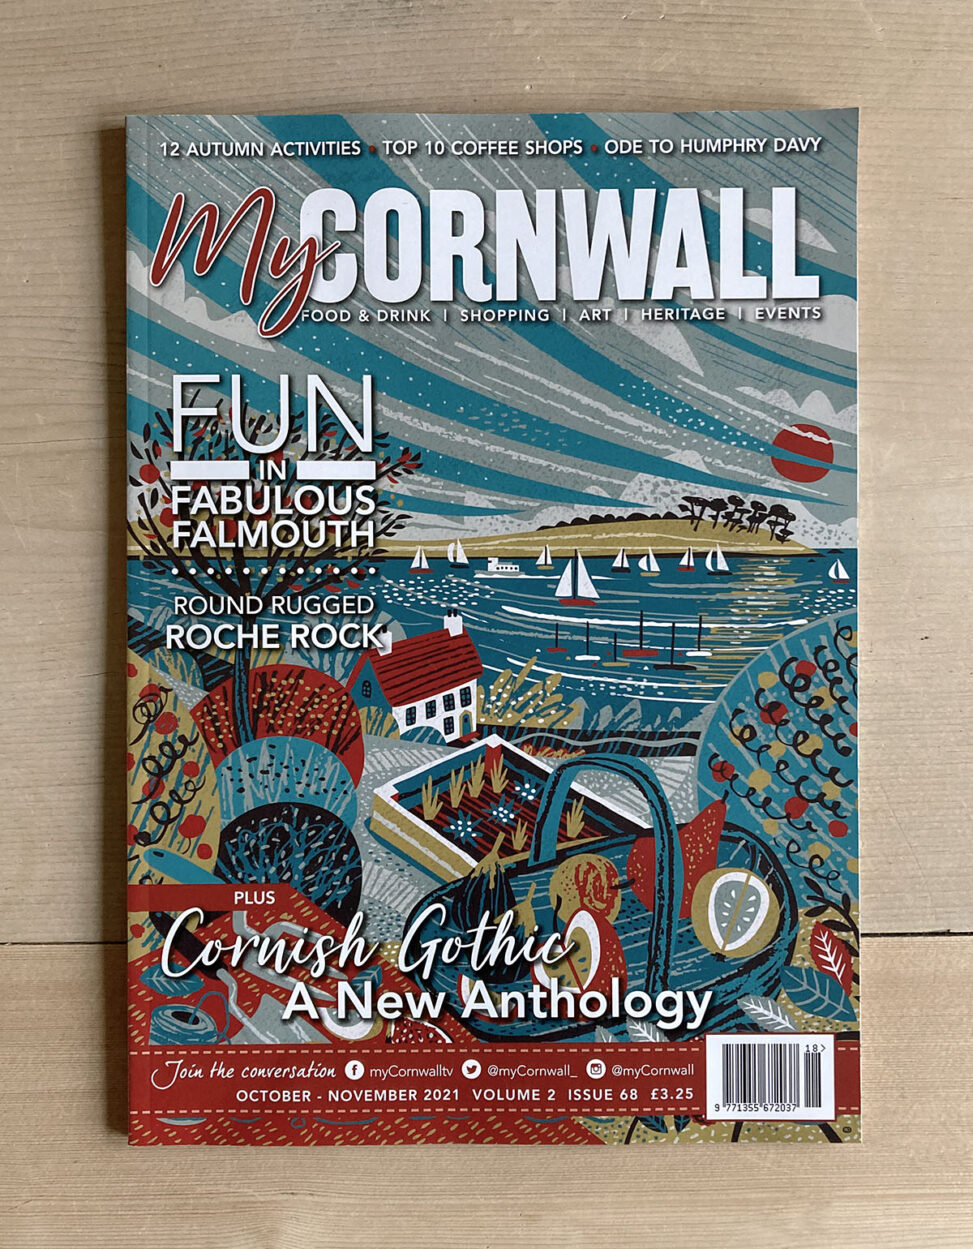 My Cornwall Magazine - cover illustration by Matt Johnson